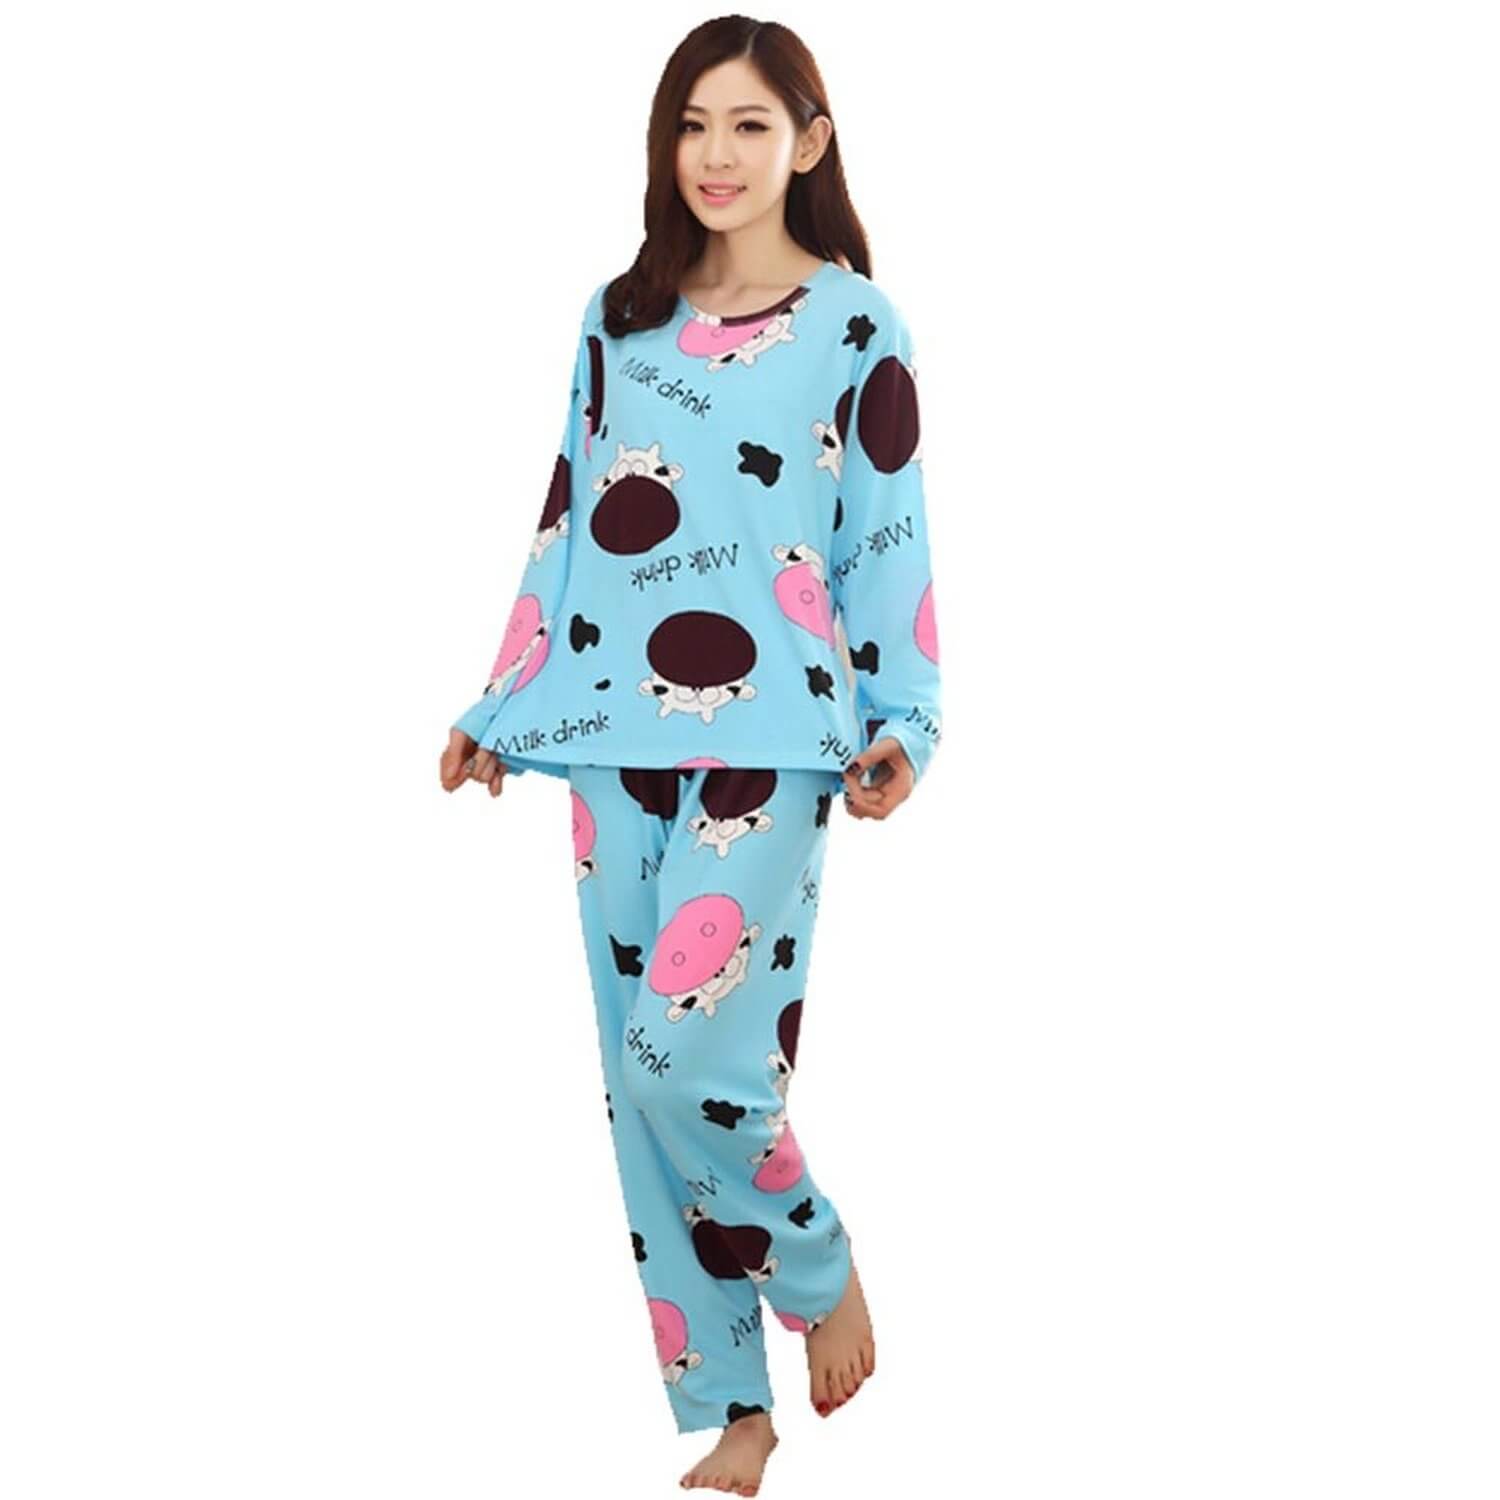 Top Ten Best Women's Long Sleeve Pajama Sets Reviews